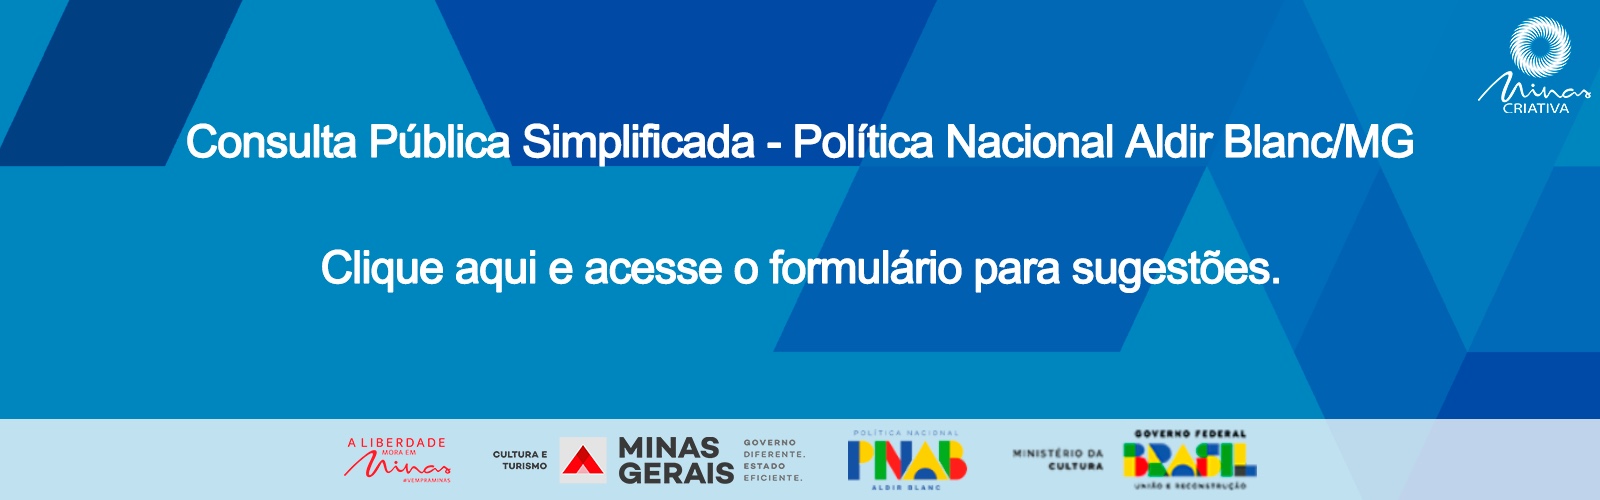 Banner Consulta Pública Simplificada PNAB